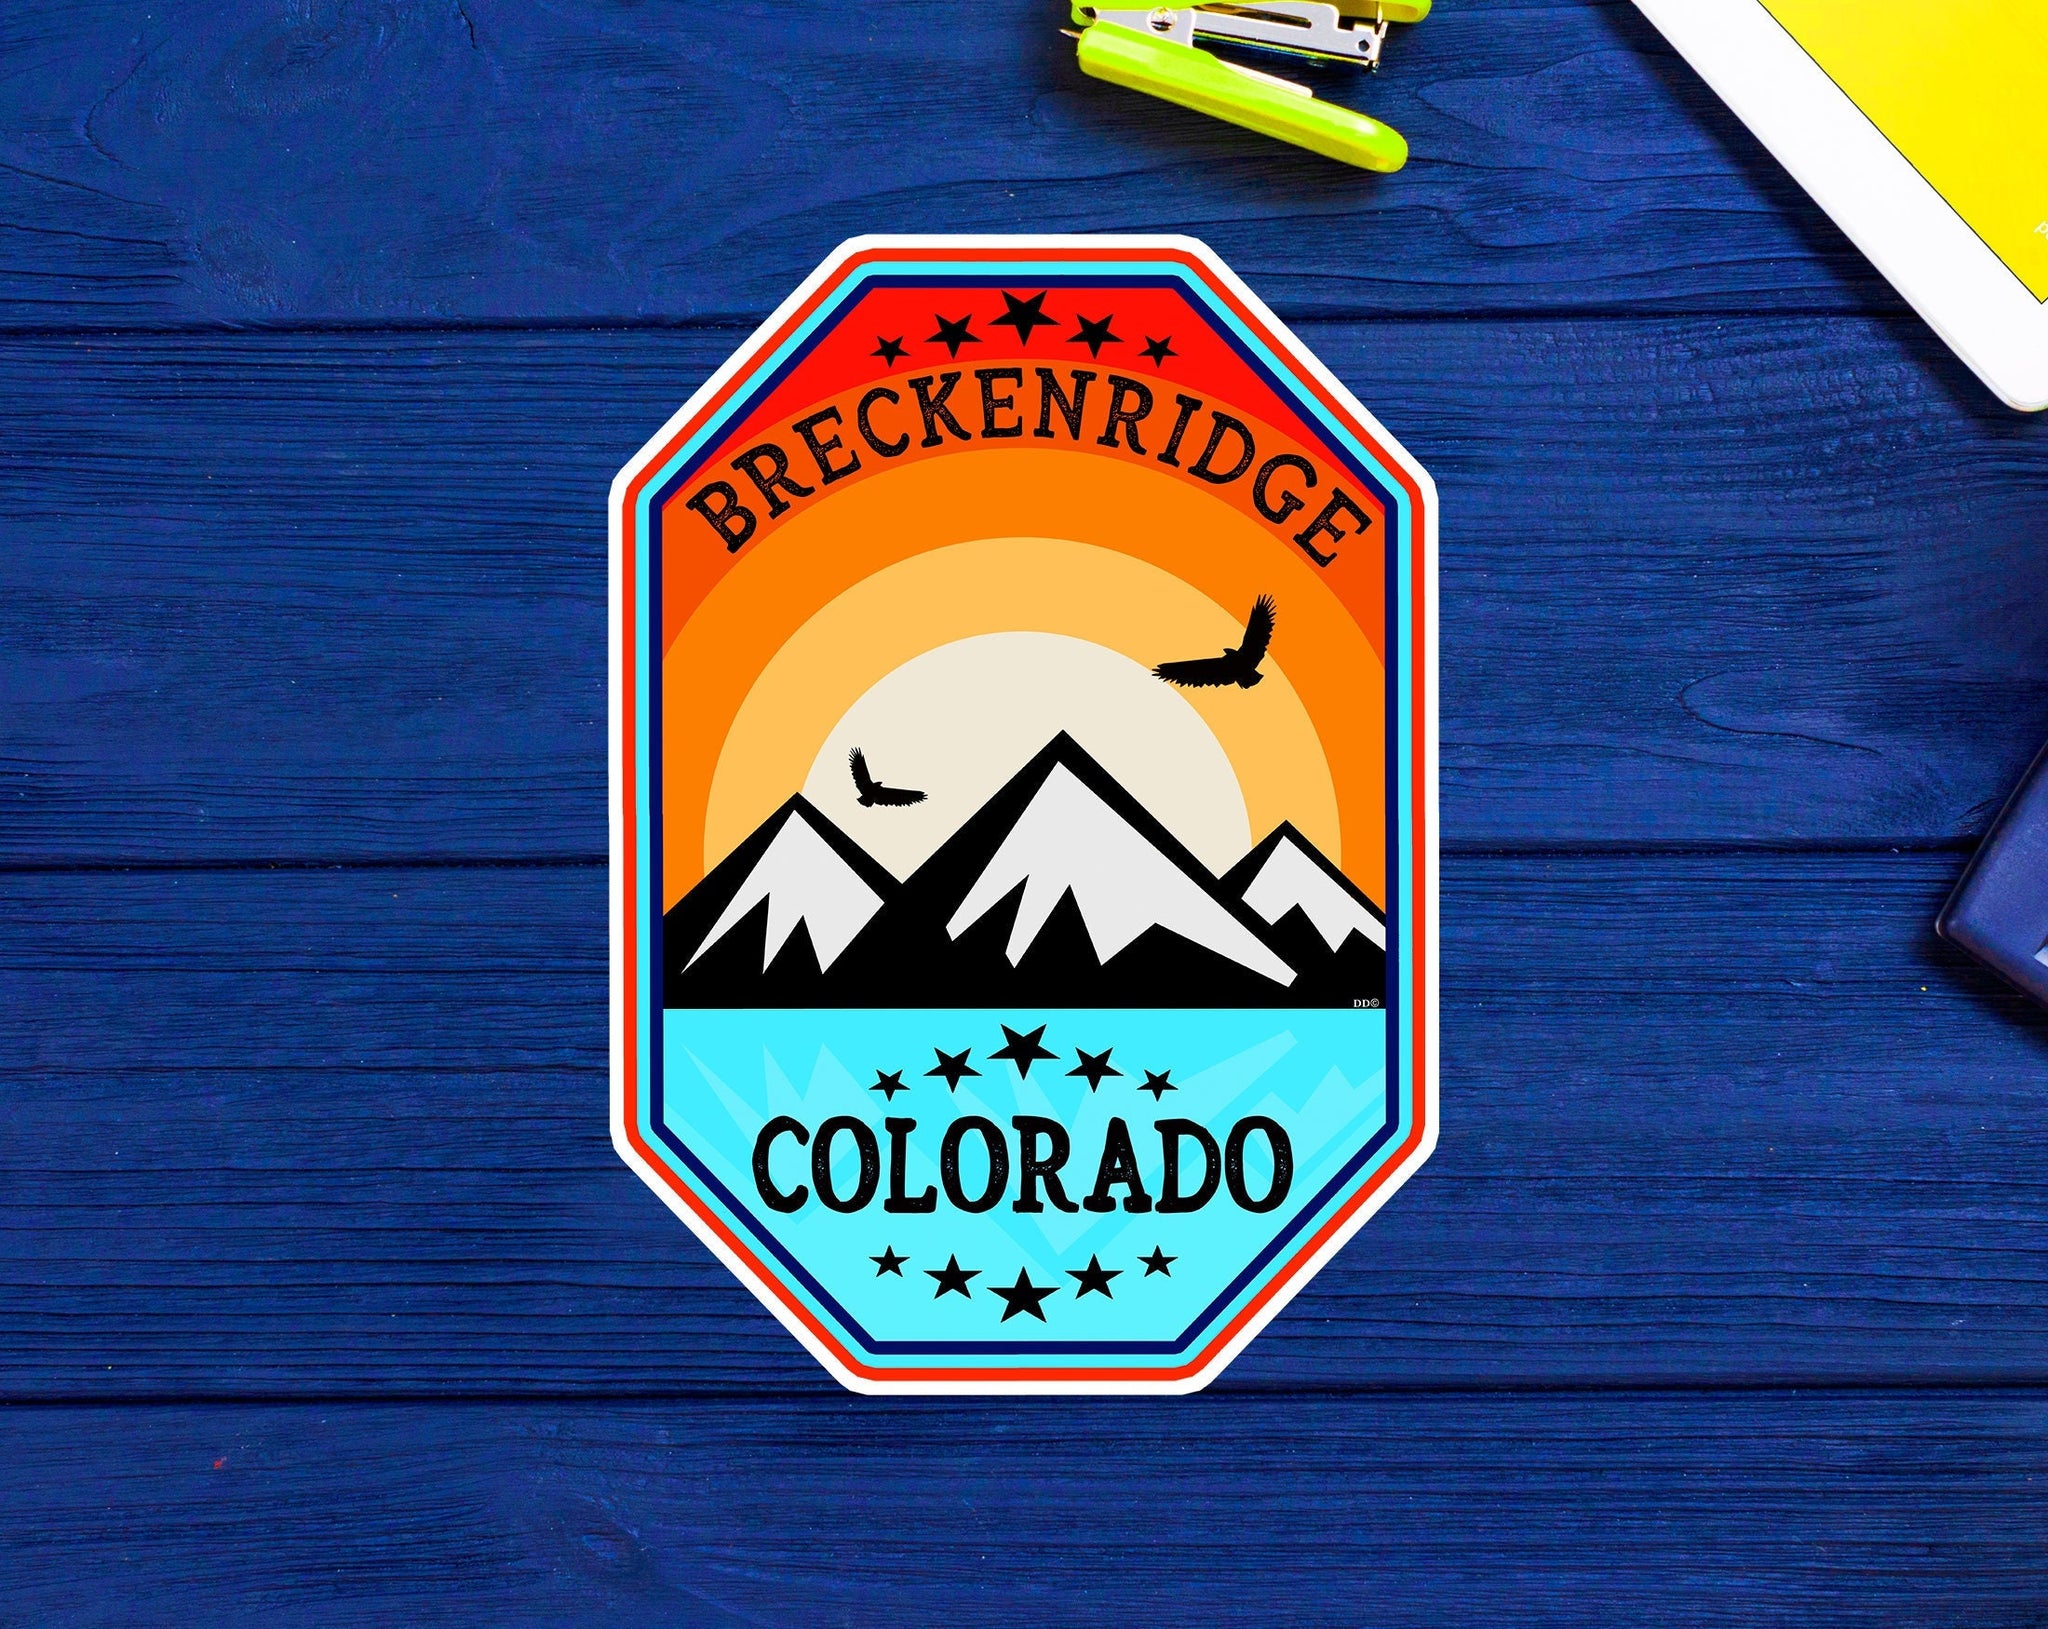 Skiing Breckenridge Colorado Decal Sticker 3.75" Hiking Snowboarding Ski